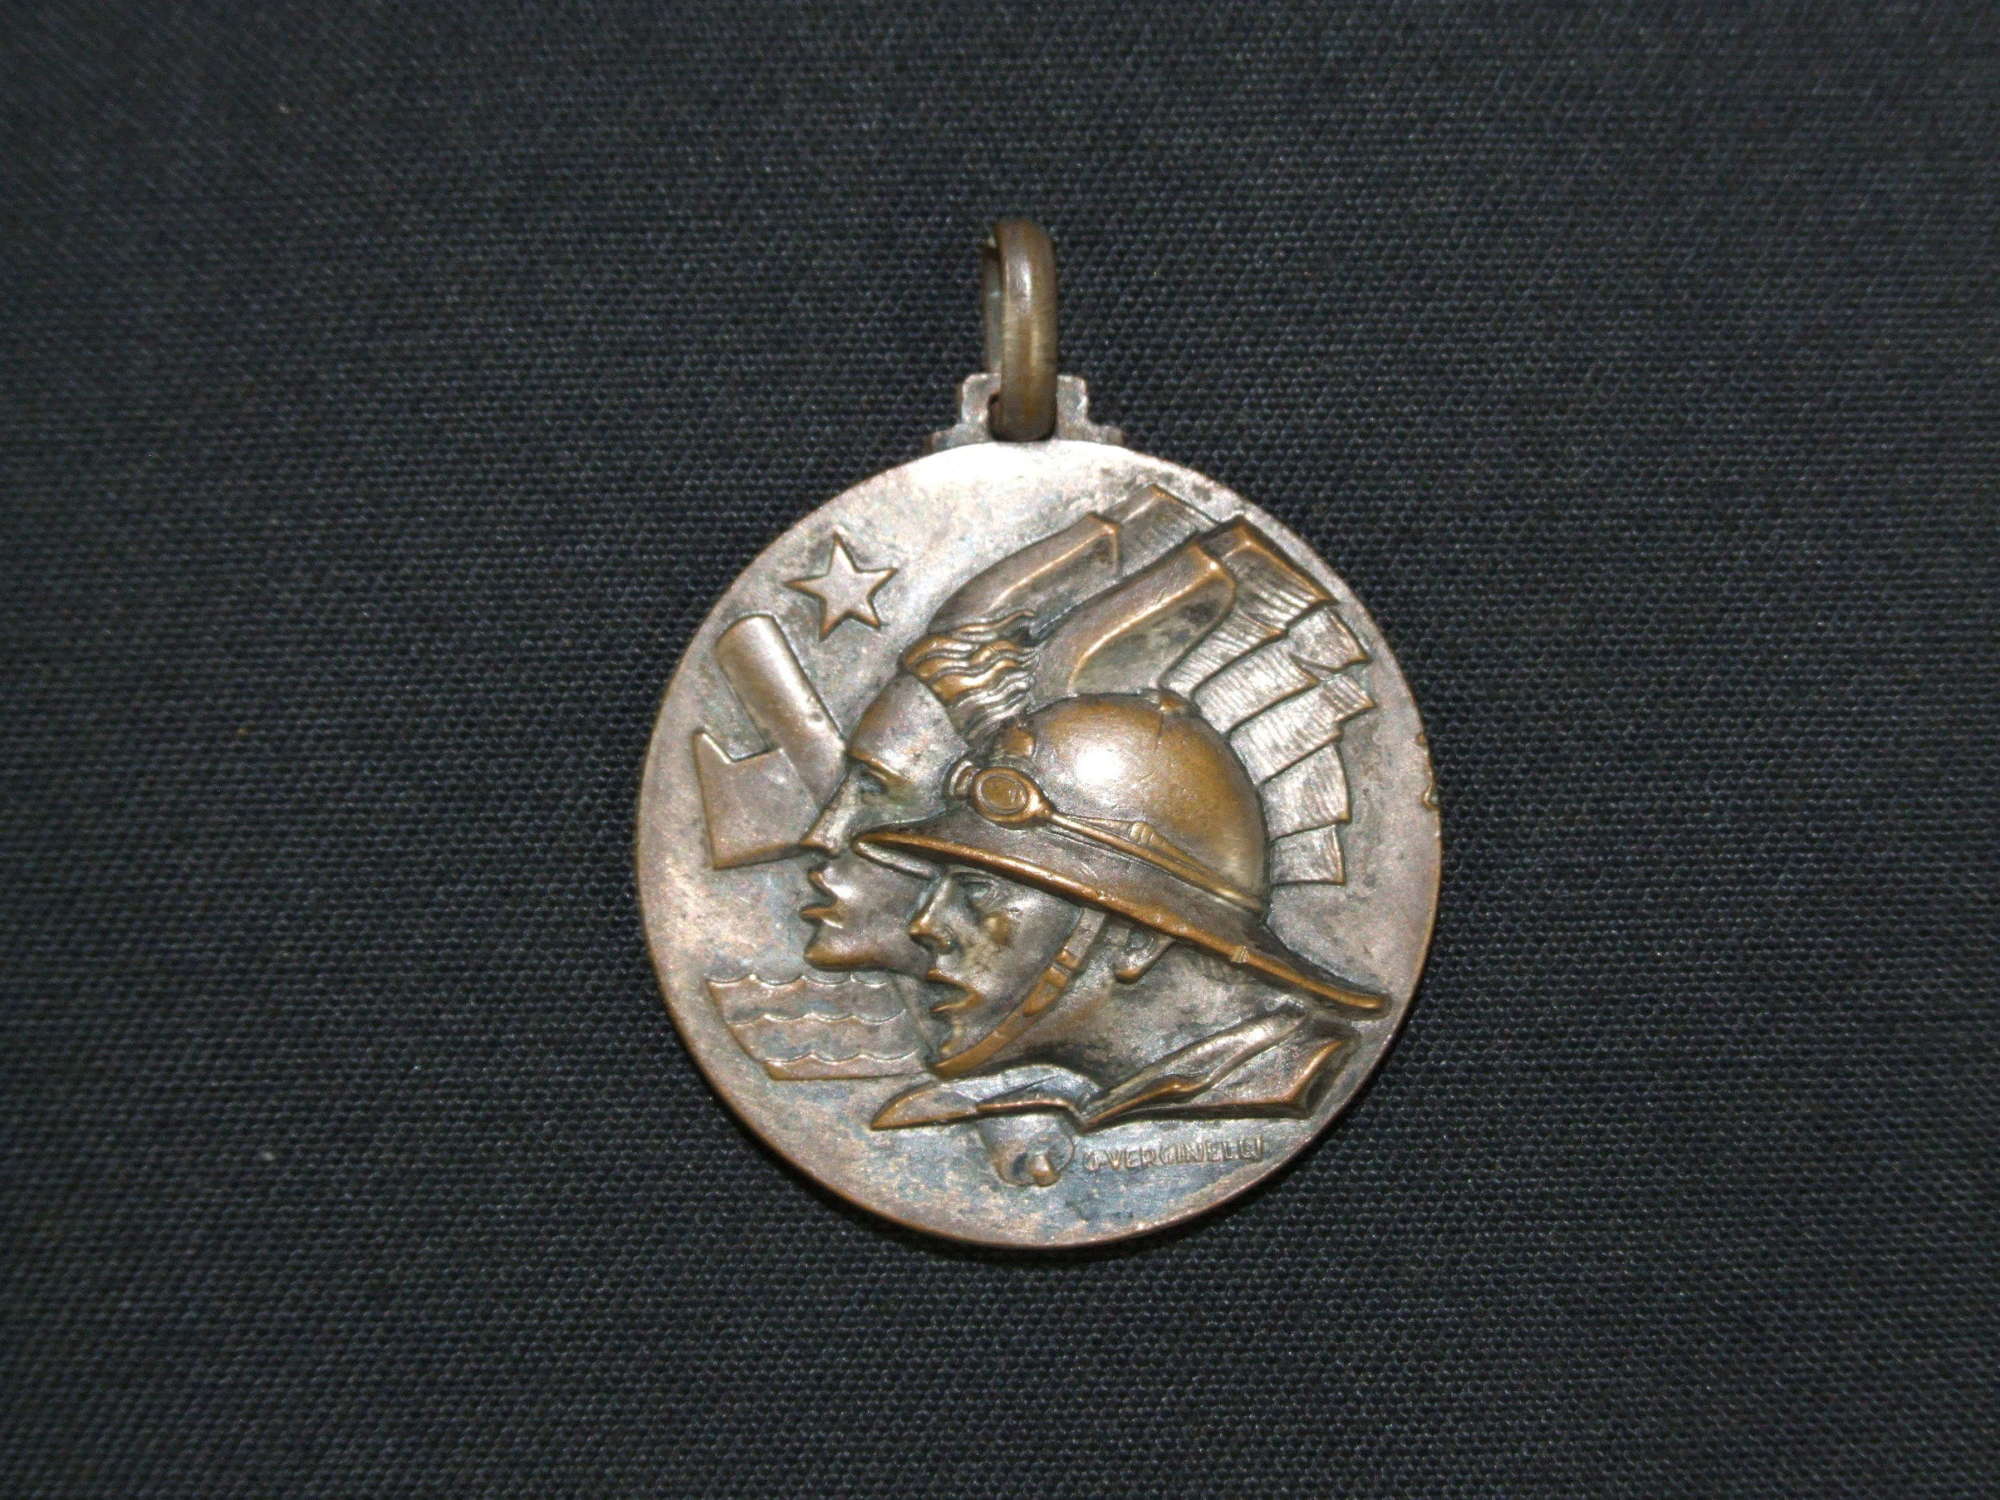 Second Italo-Ethiopian War Campaign Medal 1935-1936